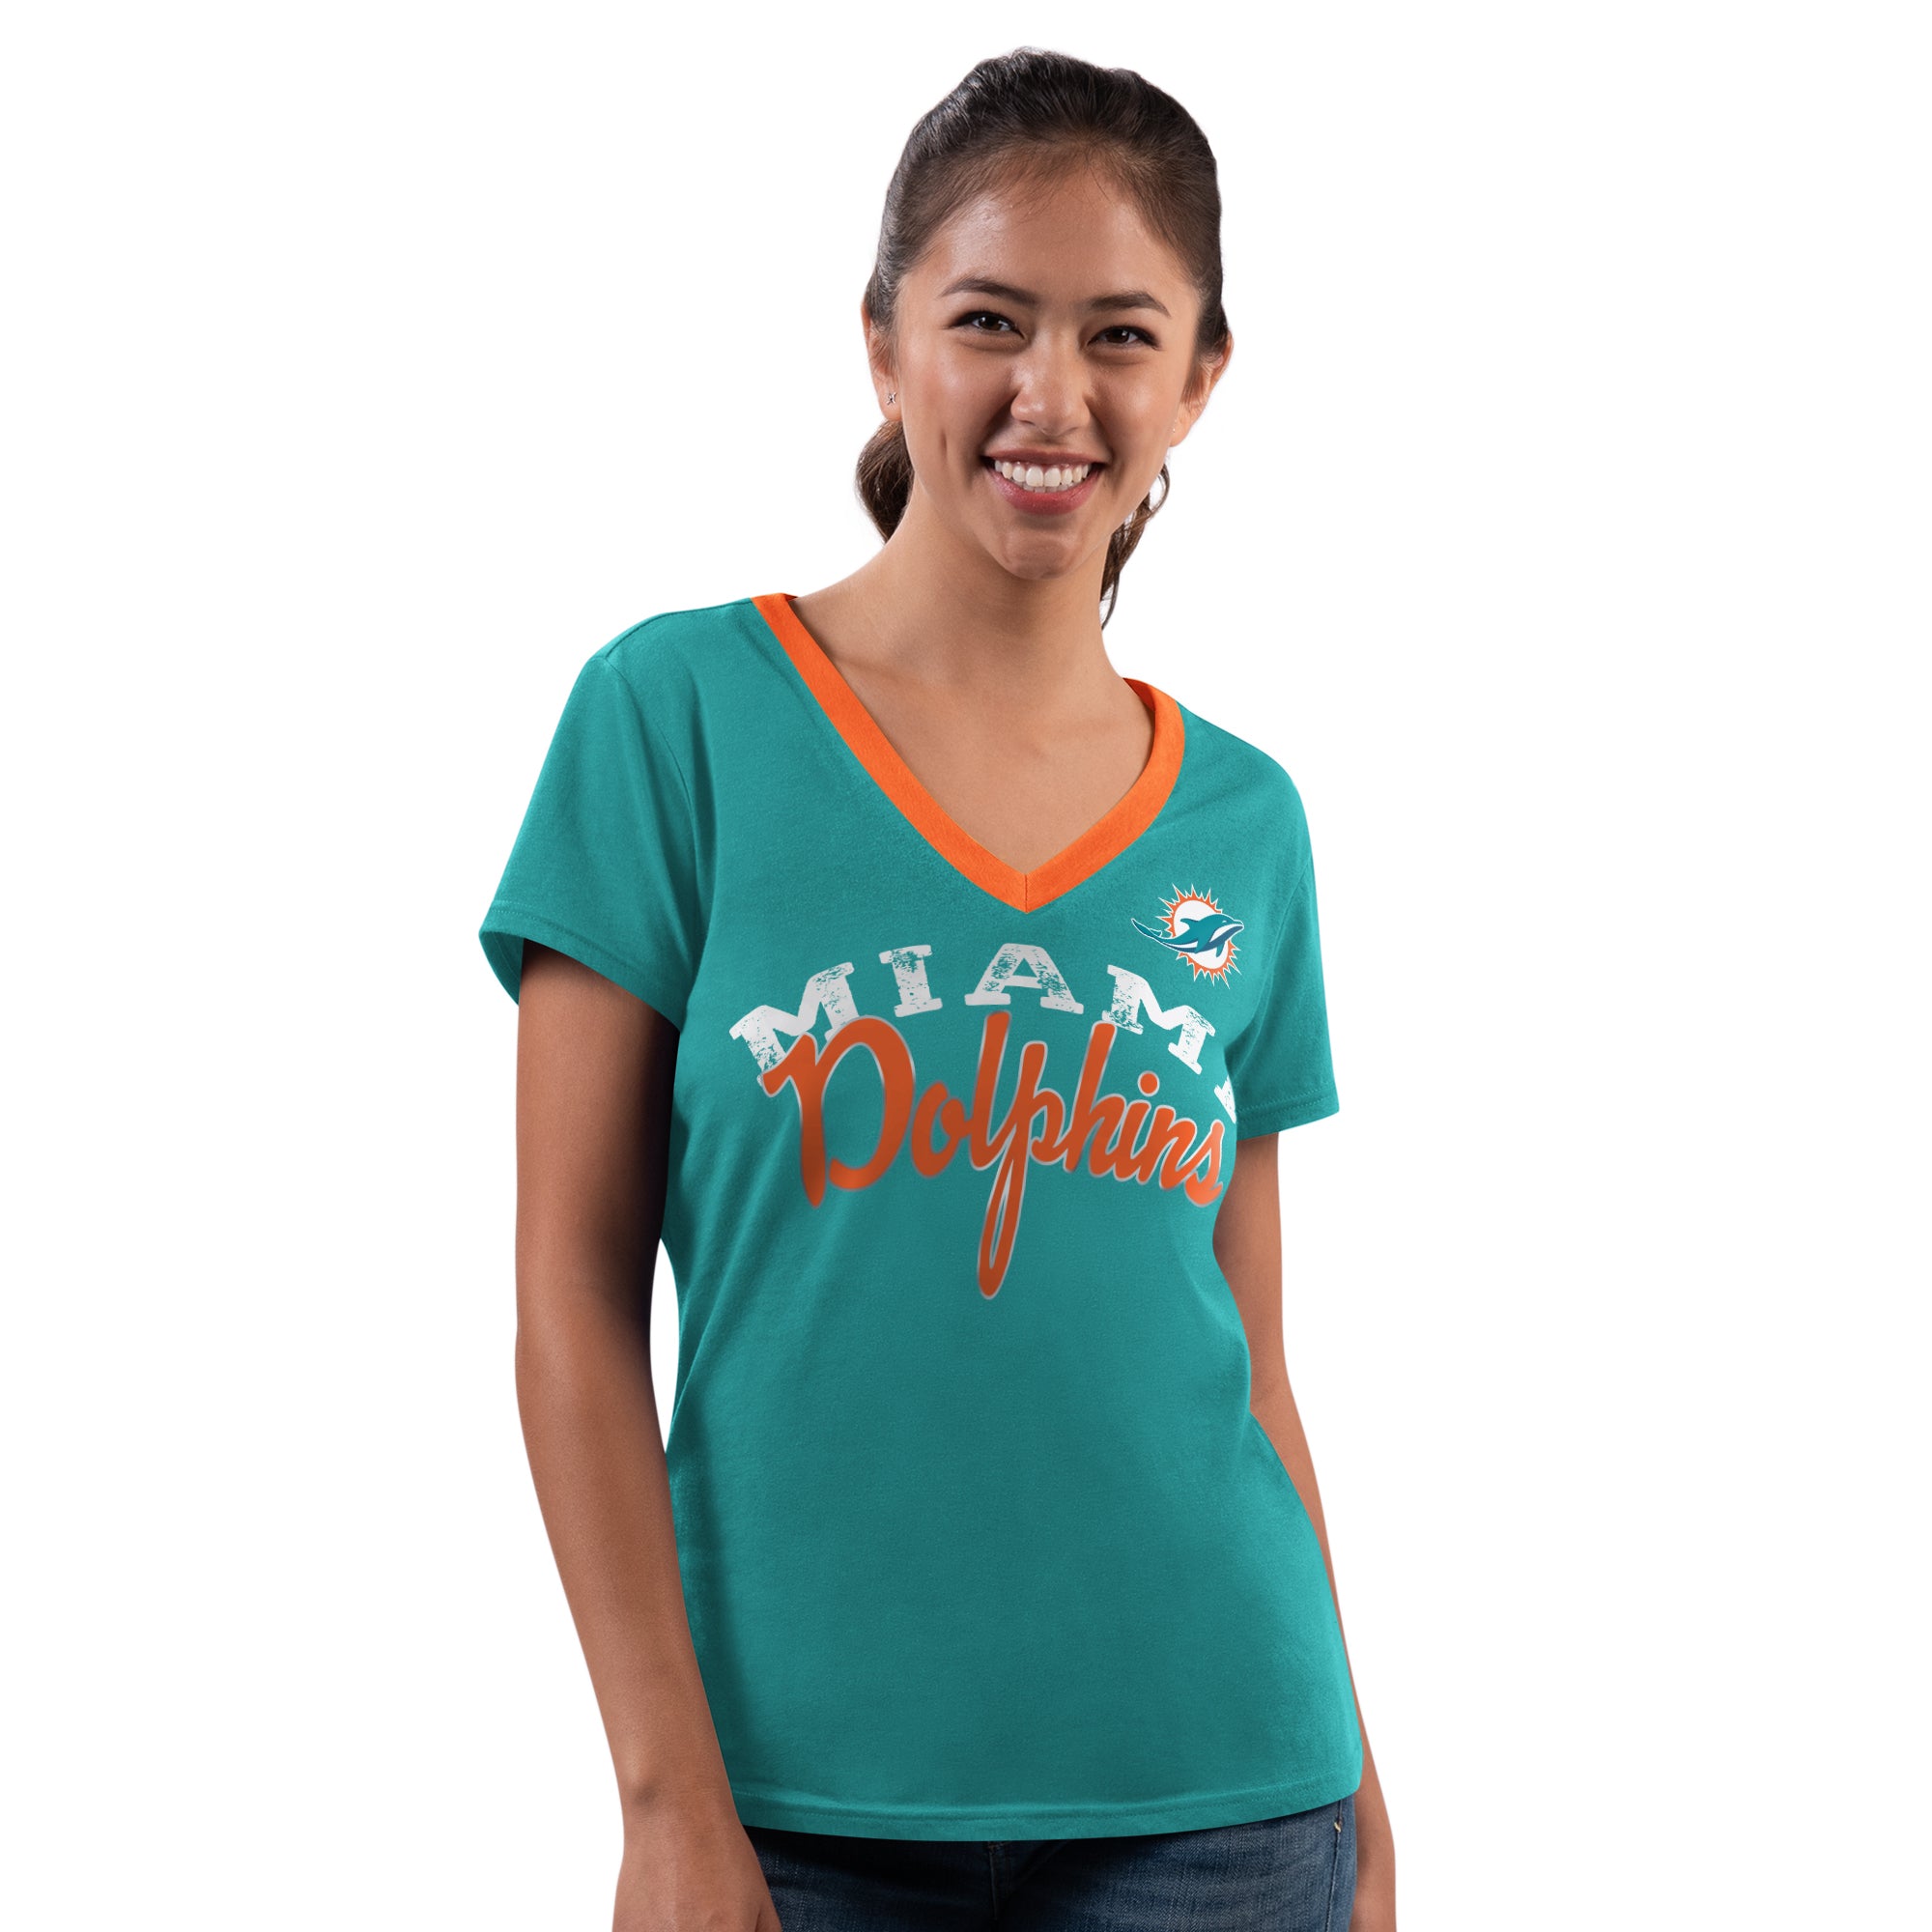 Miami Dolphins Glll 4Her Women's V-Neck Open Back T-Shirt - Aqua